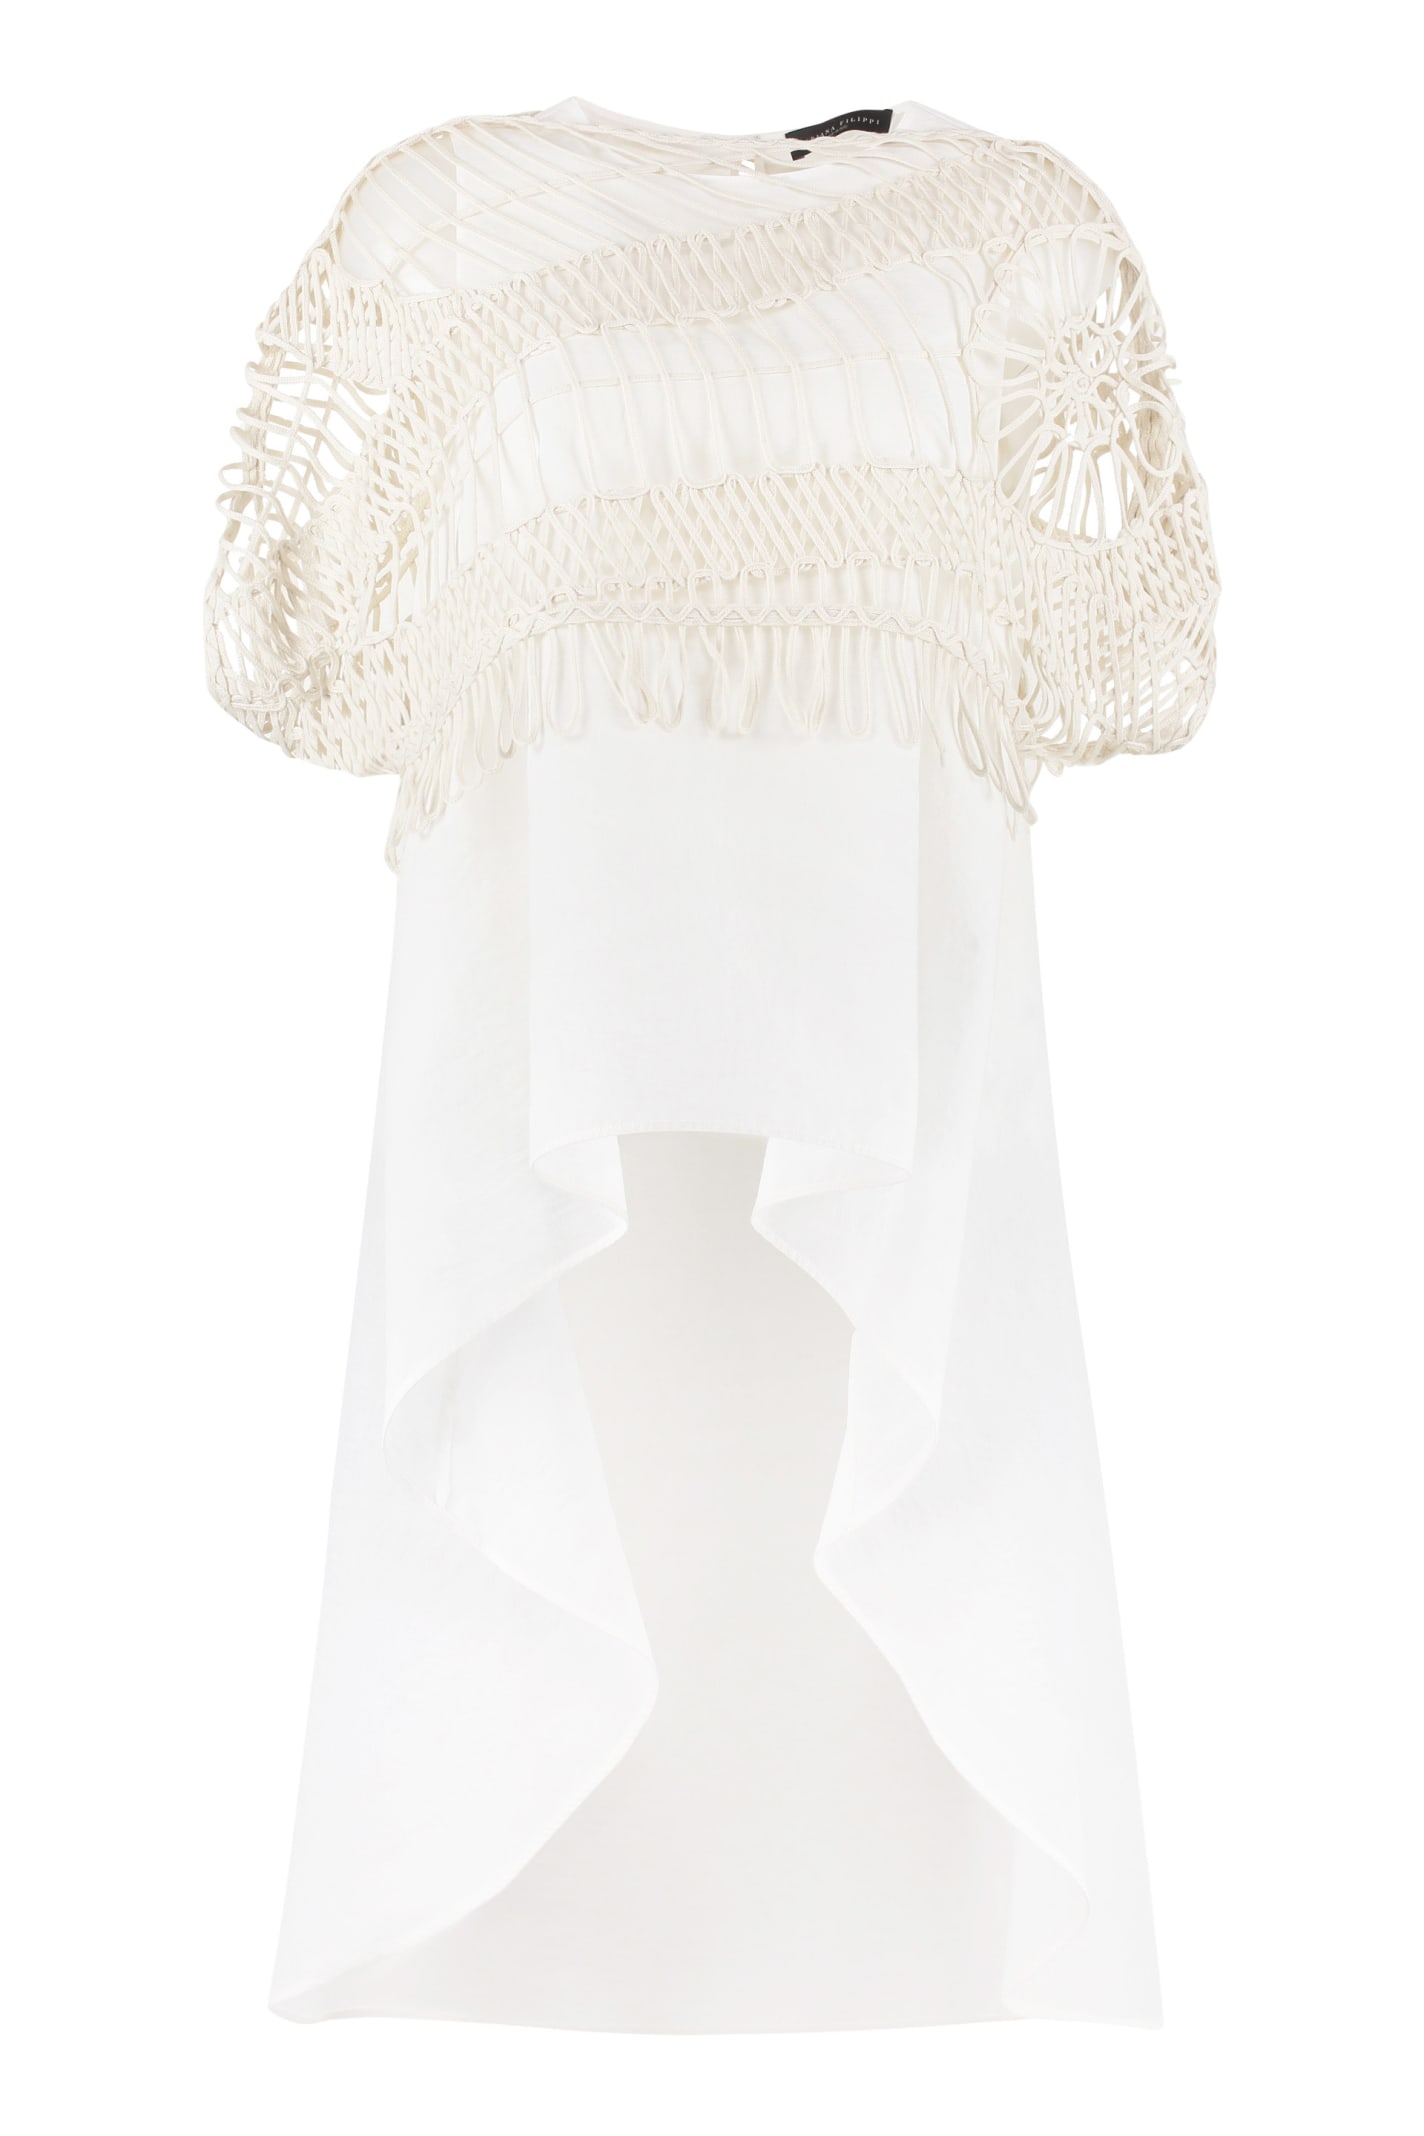 Fabiana Filippi Cotton Top With Crochet Vest